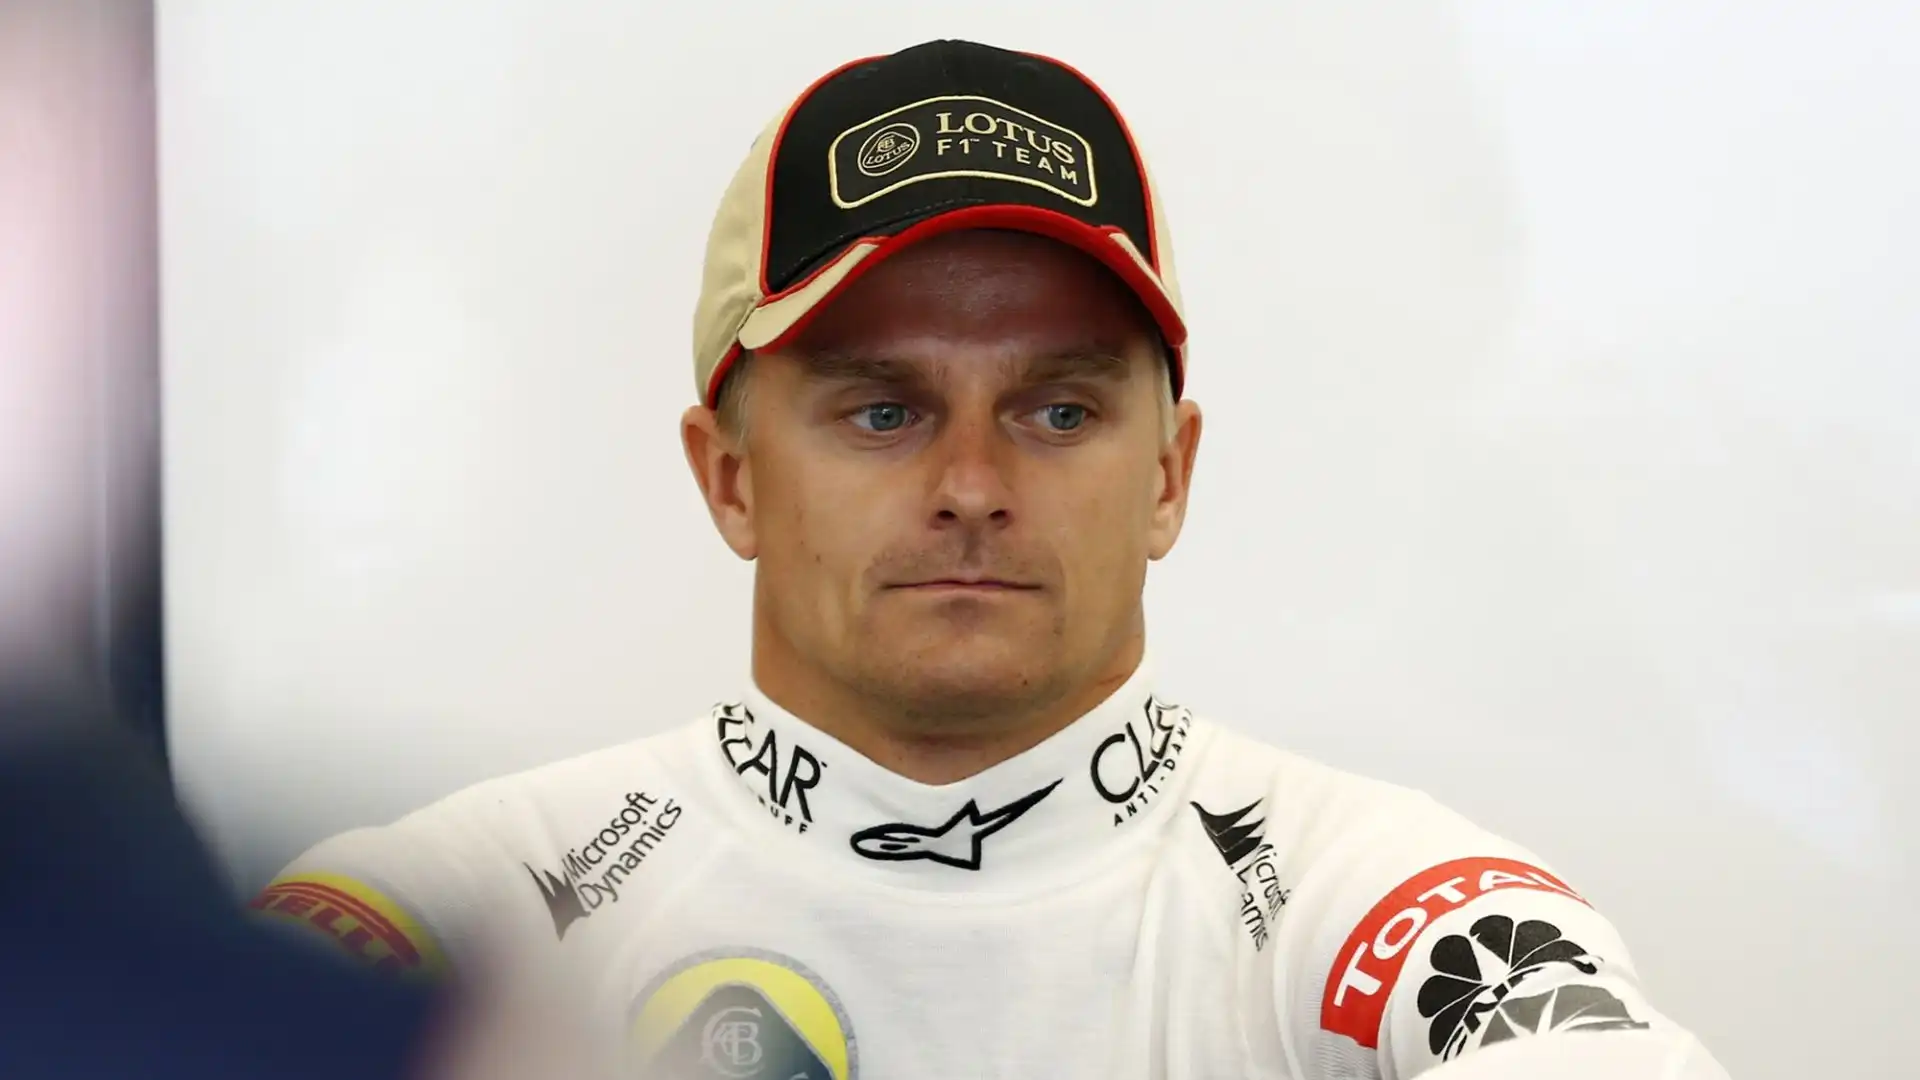 Annuncio drammatico per l'ex pilota di Formula 1 Heikki Kovalainen